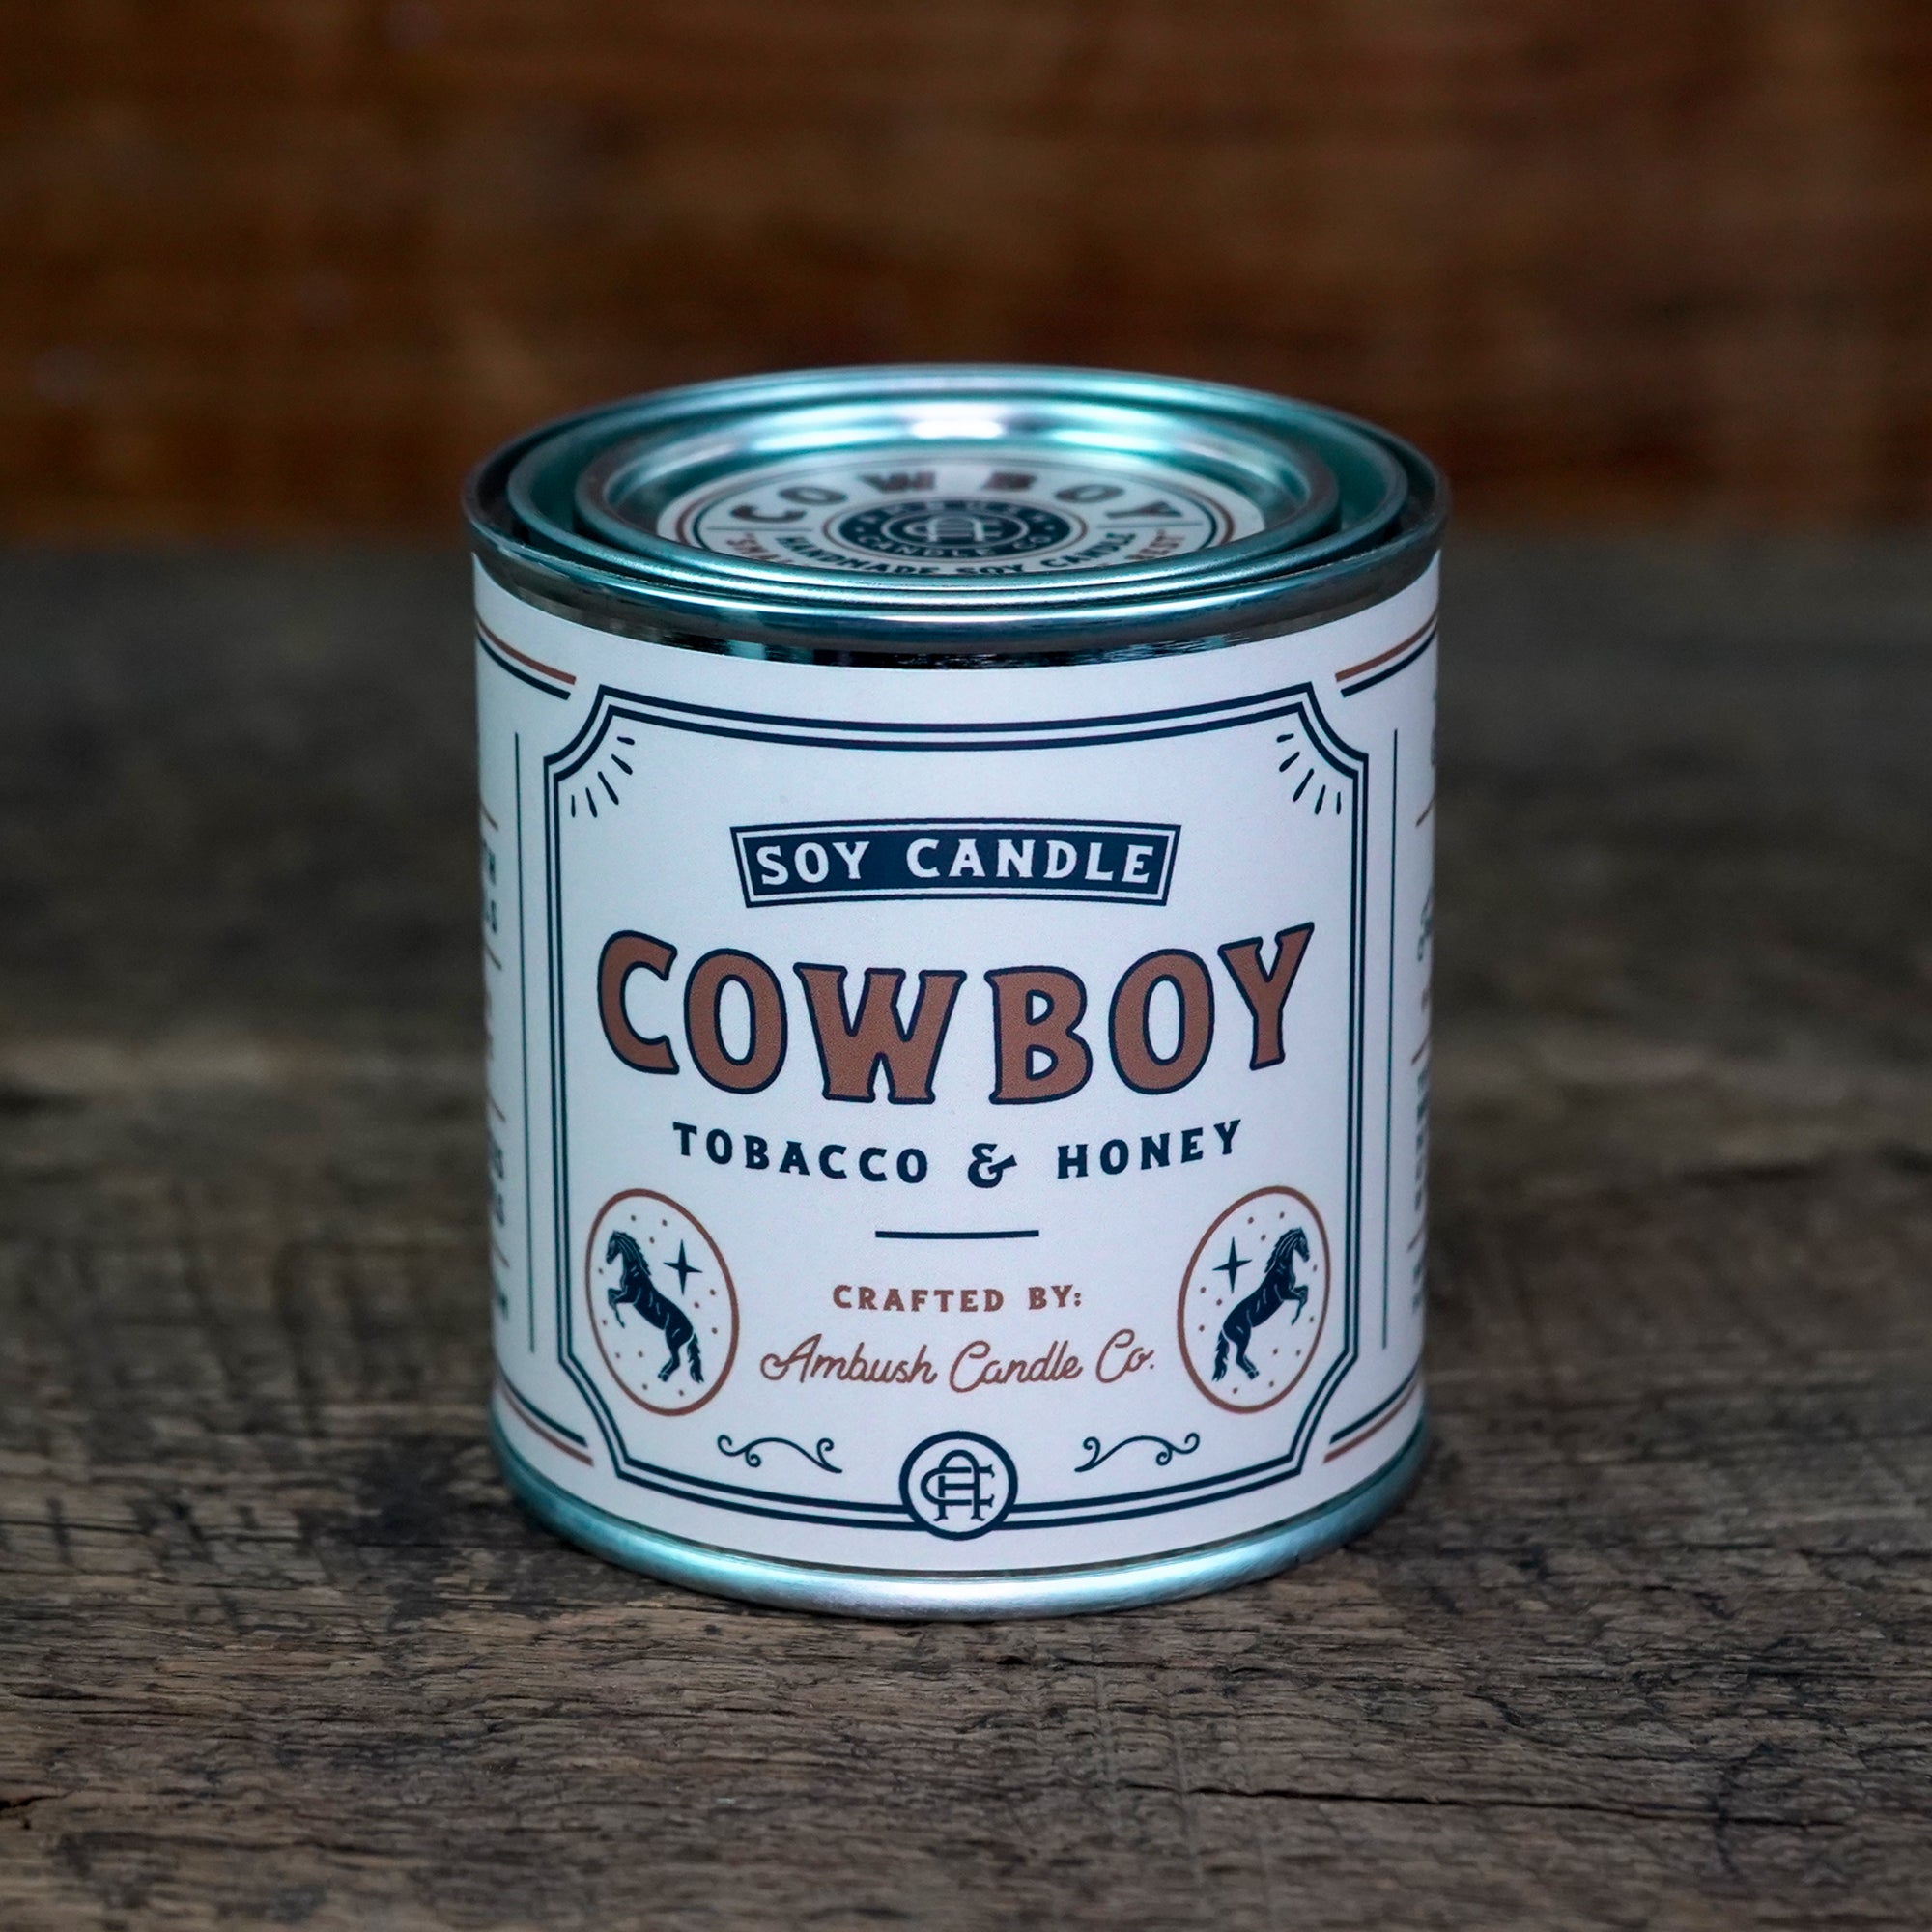 Ambush Candle Co. 8oz 'Cowboy' Soy Candle - Tobacco / Honey